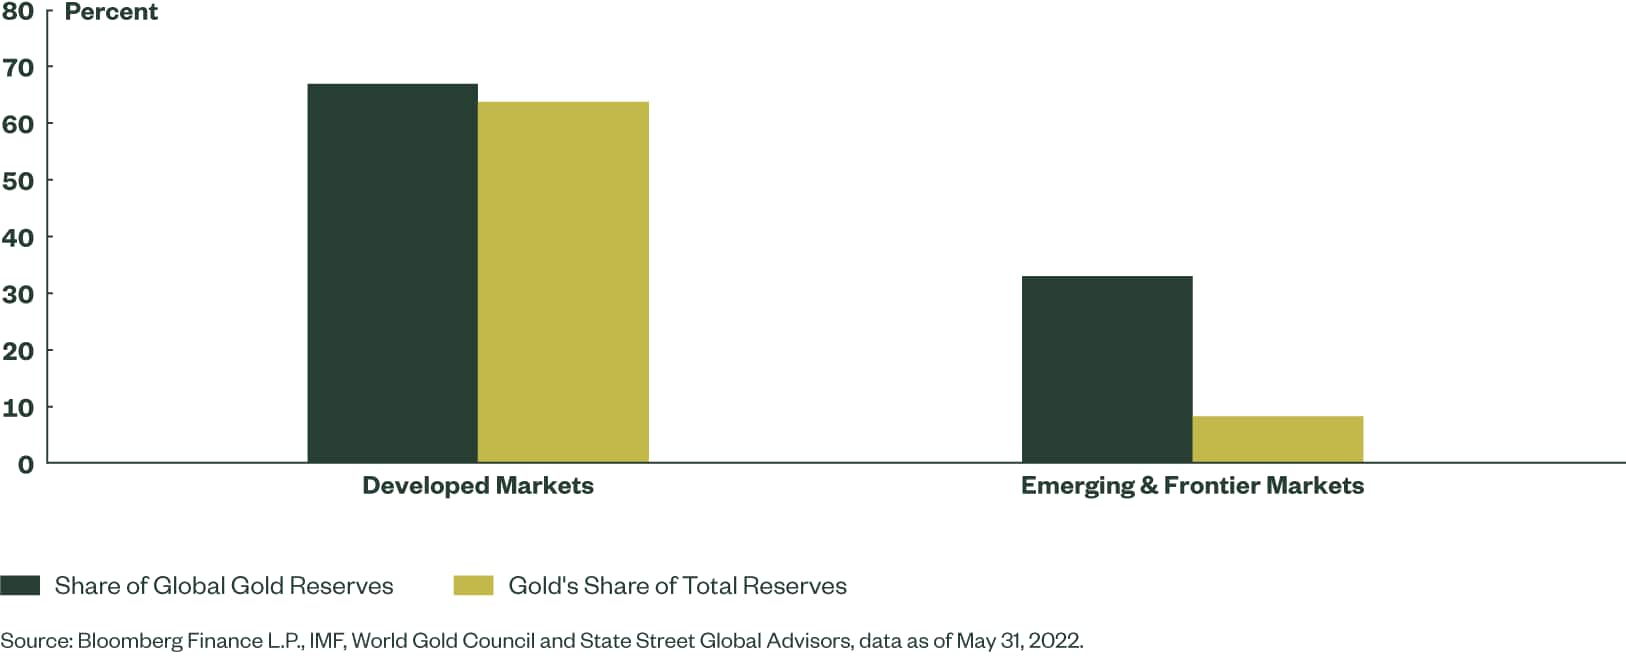 Emerging Markets’ Gold Reserves Remain Well Below Developed Market Peers